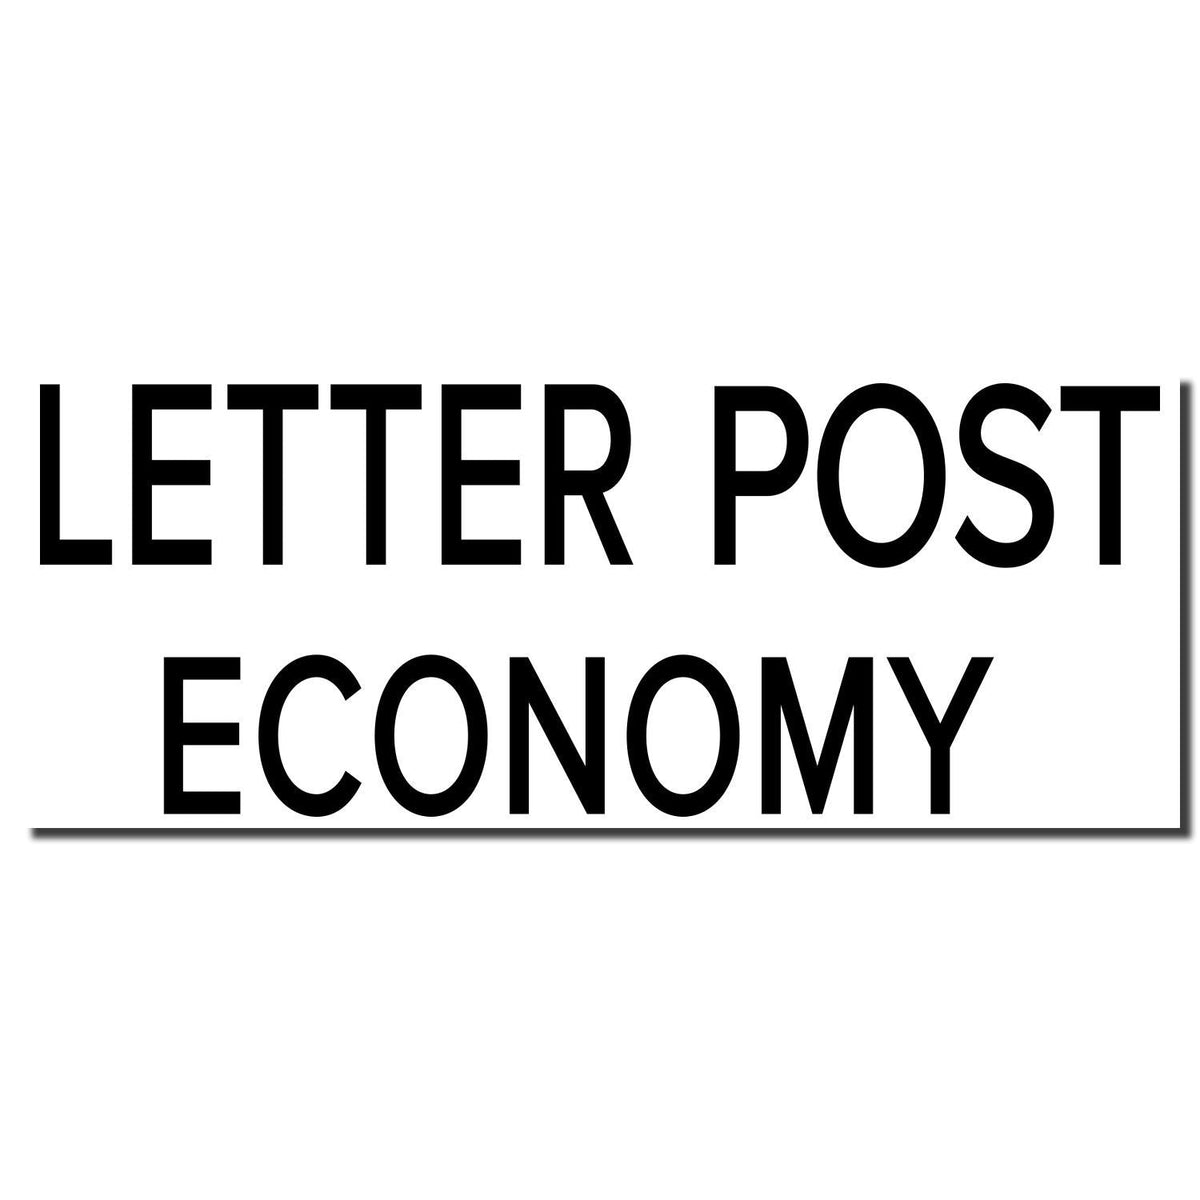 Enlarged Imprint Self-Inking Letter Post Economy Stamp Sample